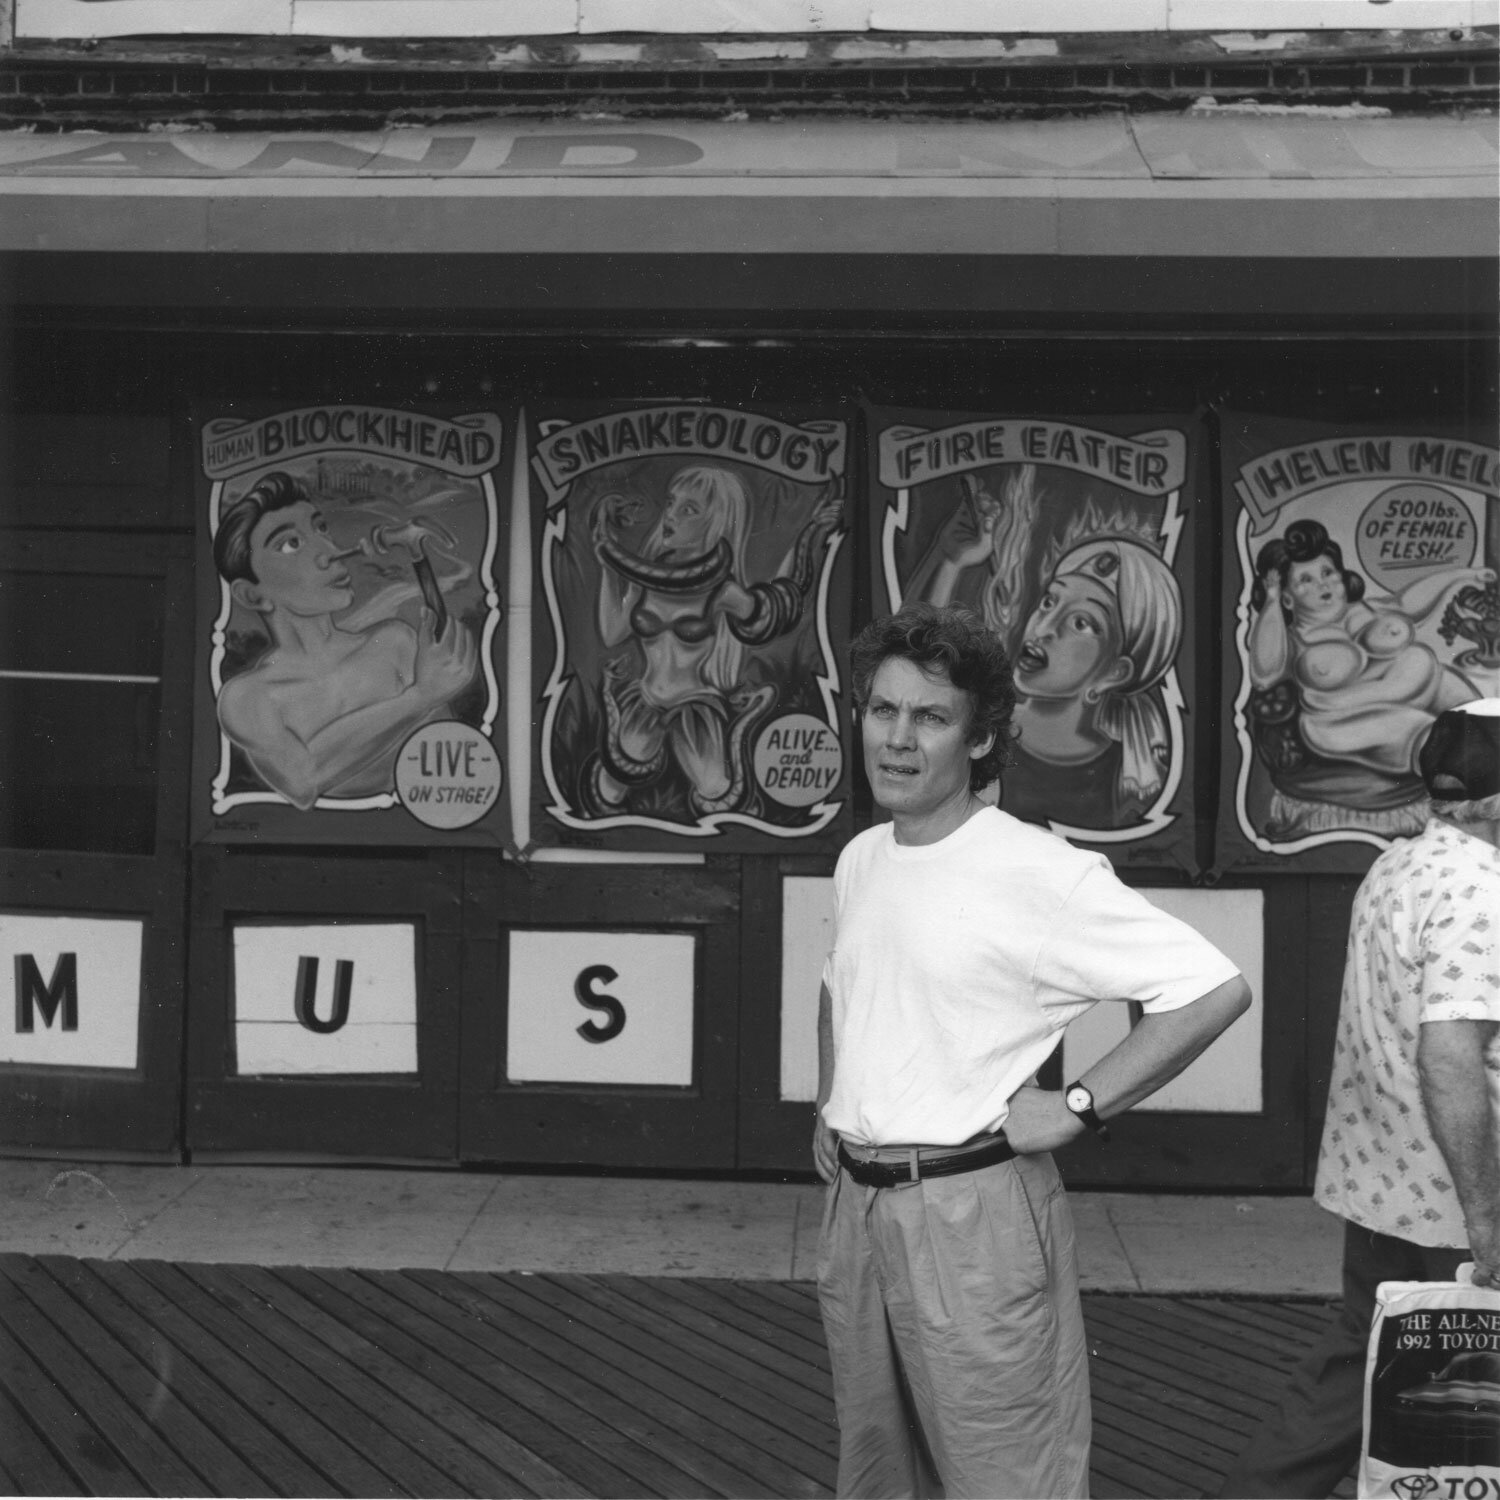  Coney Island Boardwalk, 1991  Photo: Abe Frajndlich 